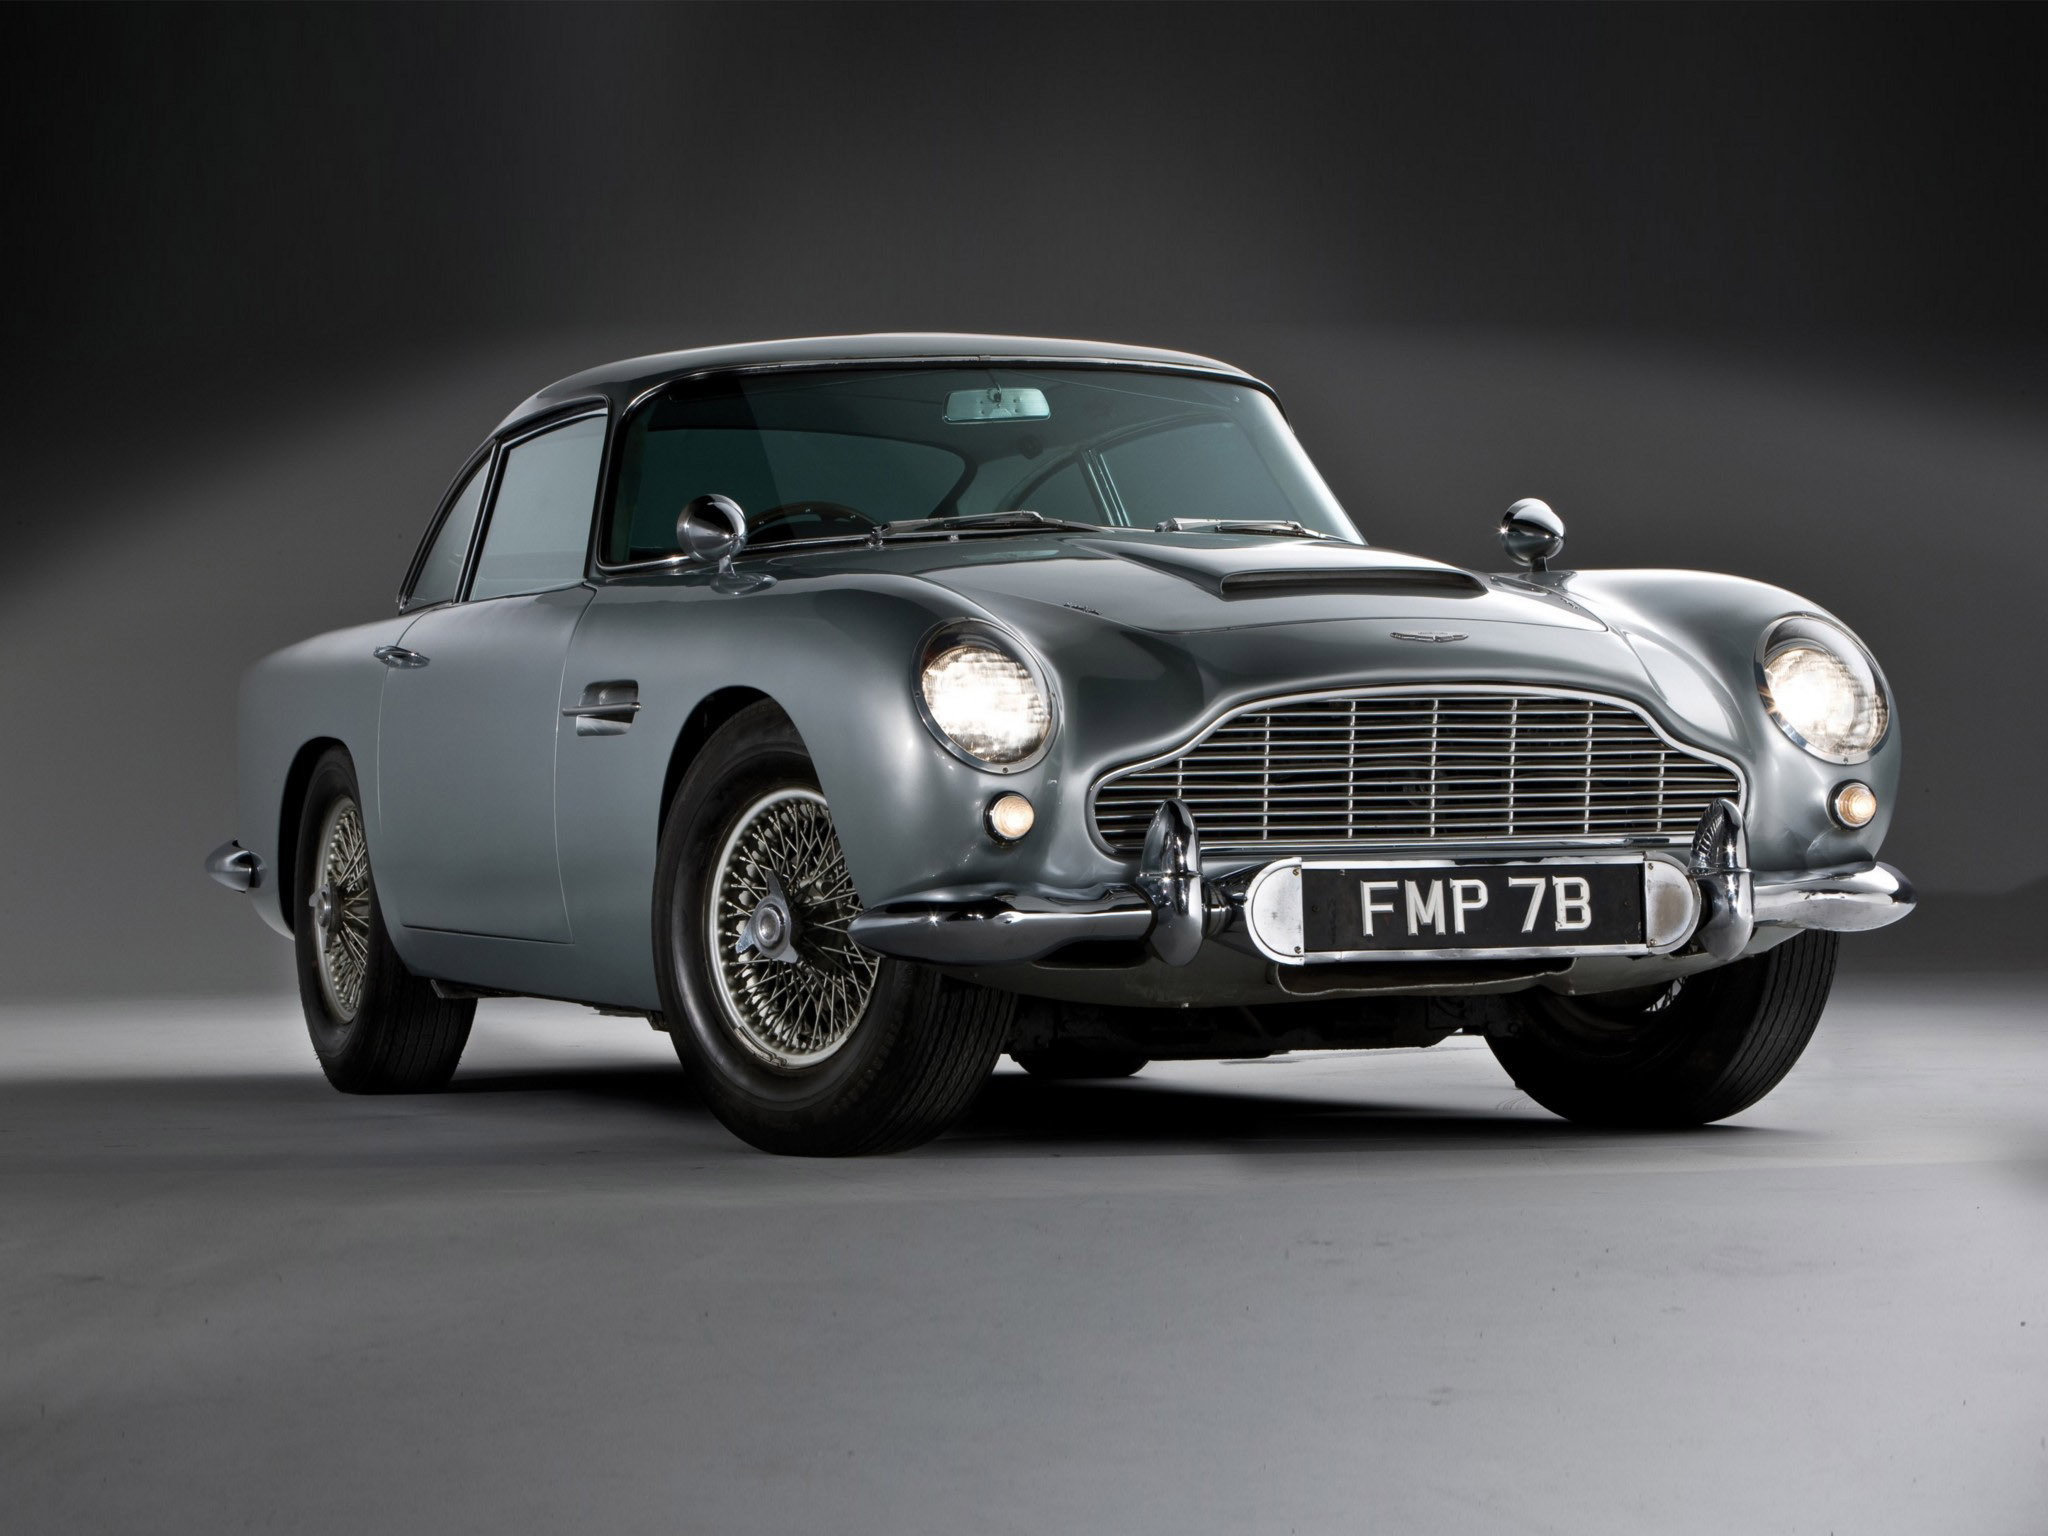 Aston-Martin-DB5-James-Bond-Edition-1964-Photo-18.jpg